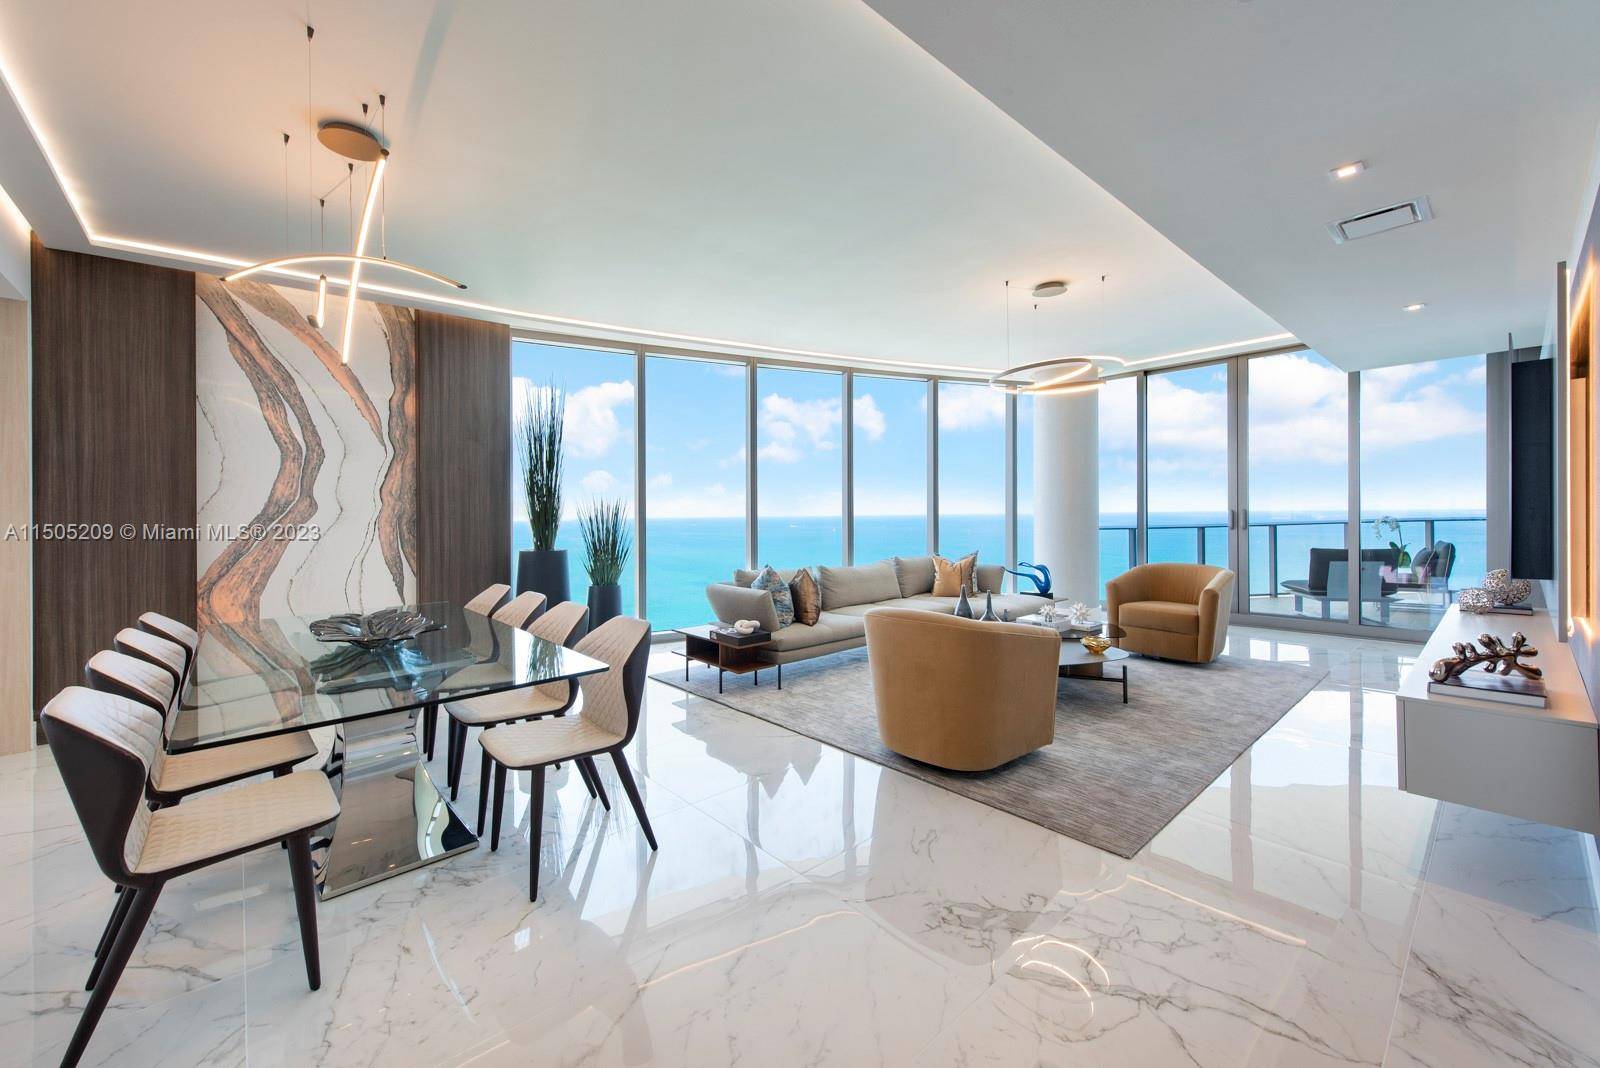 800K REDUCTION. Luxury stunning brand new apt at the amazing Ritz Carlton Residence in Sunny Isles Beach.